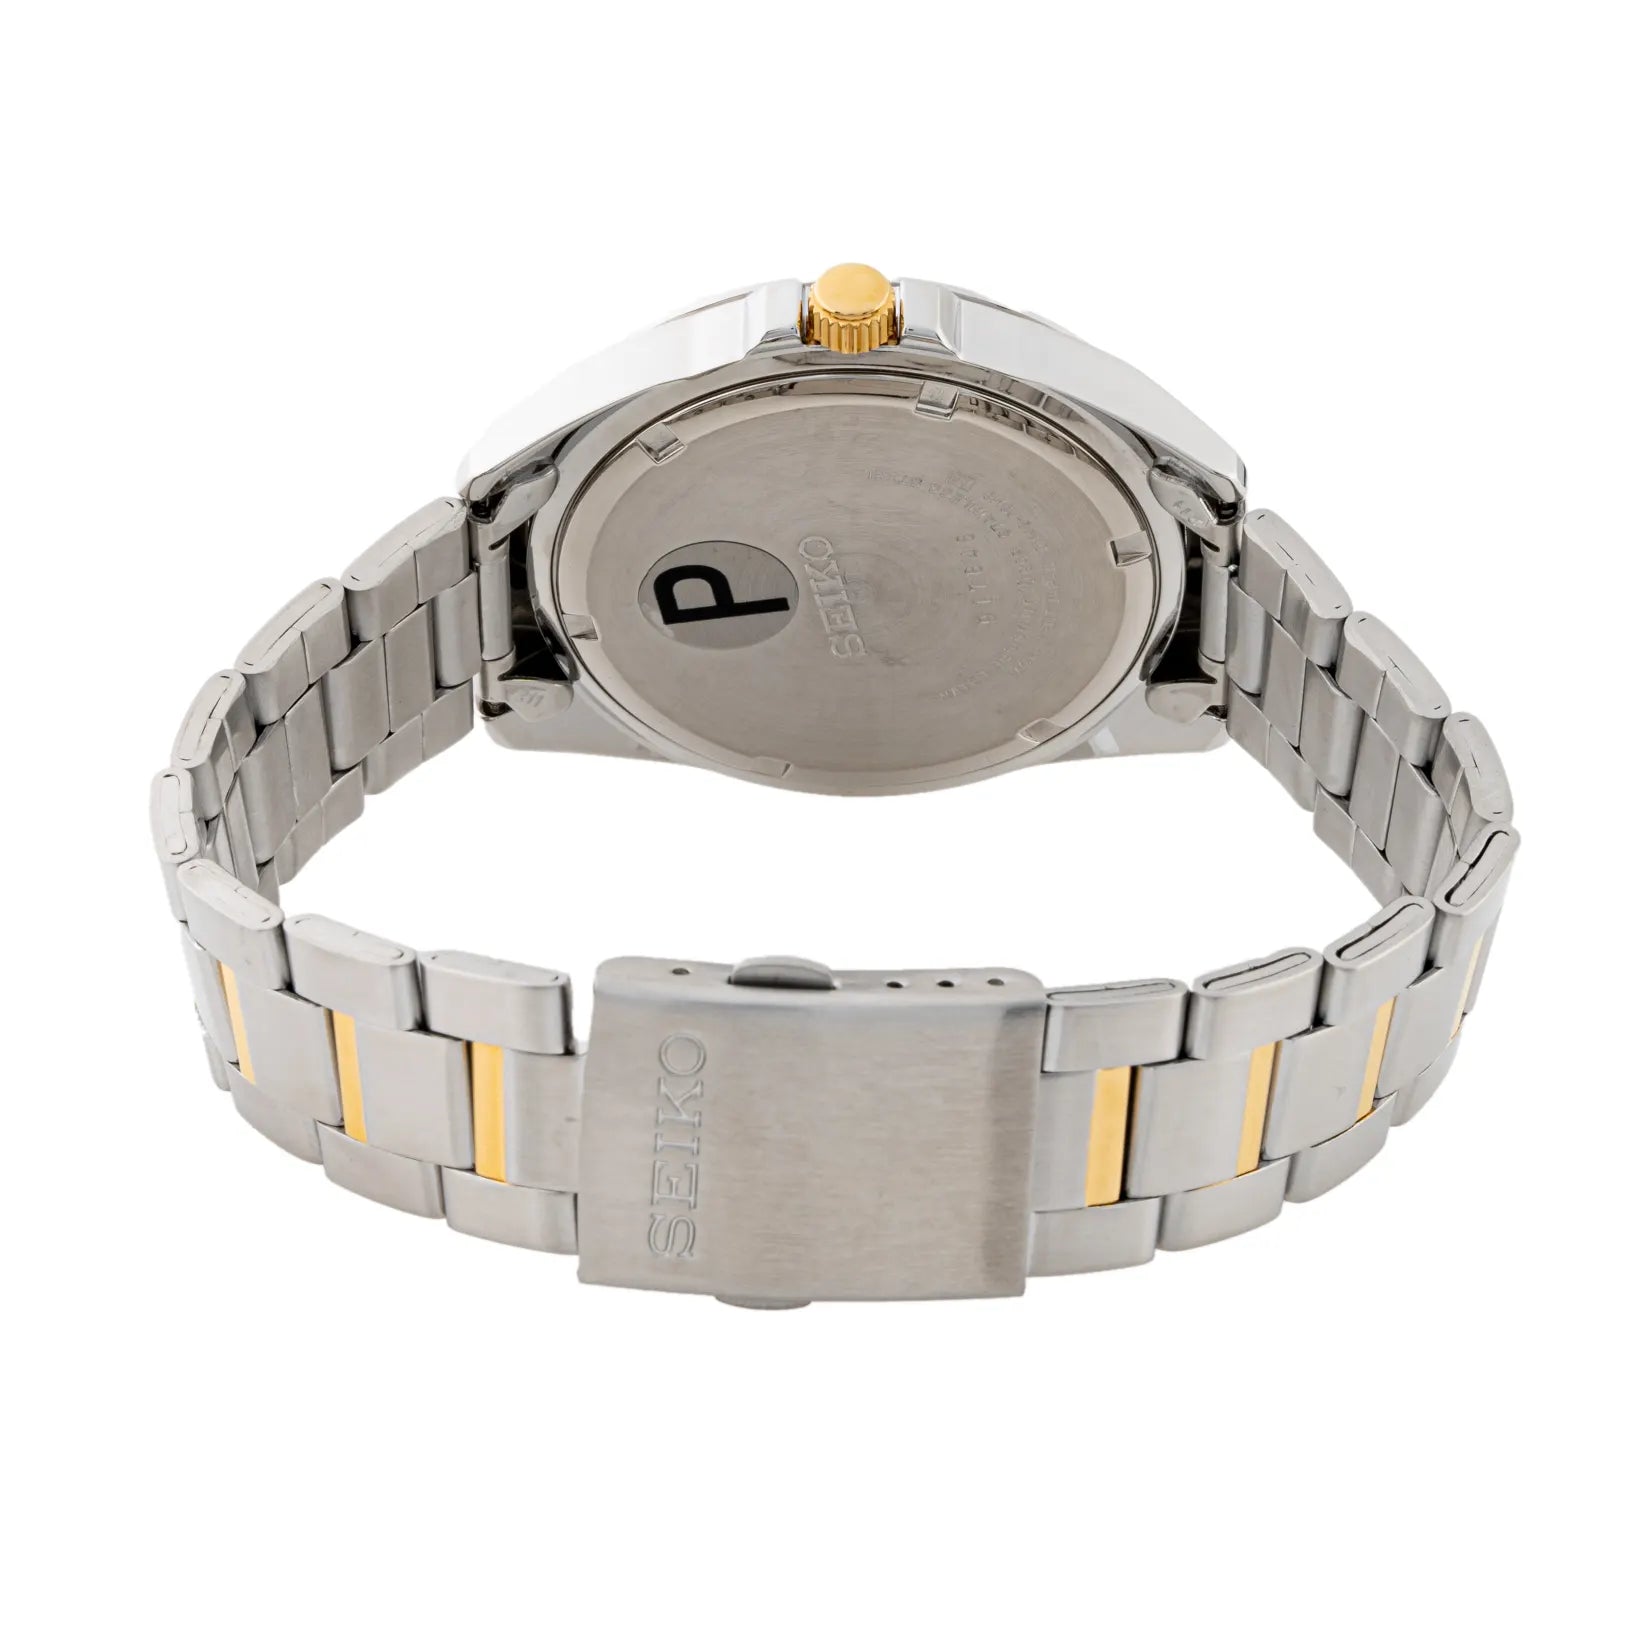 SEIKO Quartz Silver Dial Men's Watch -SUR211P1